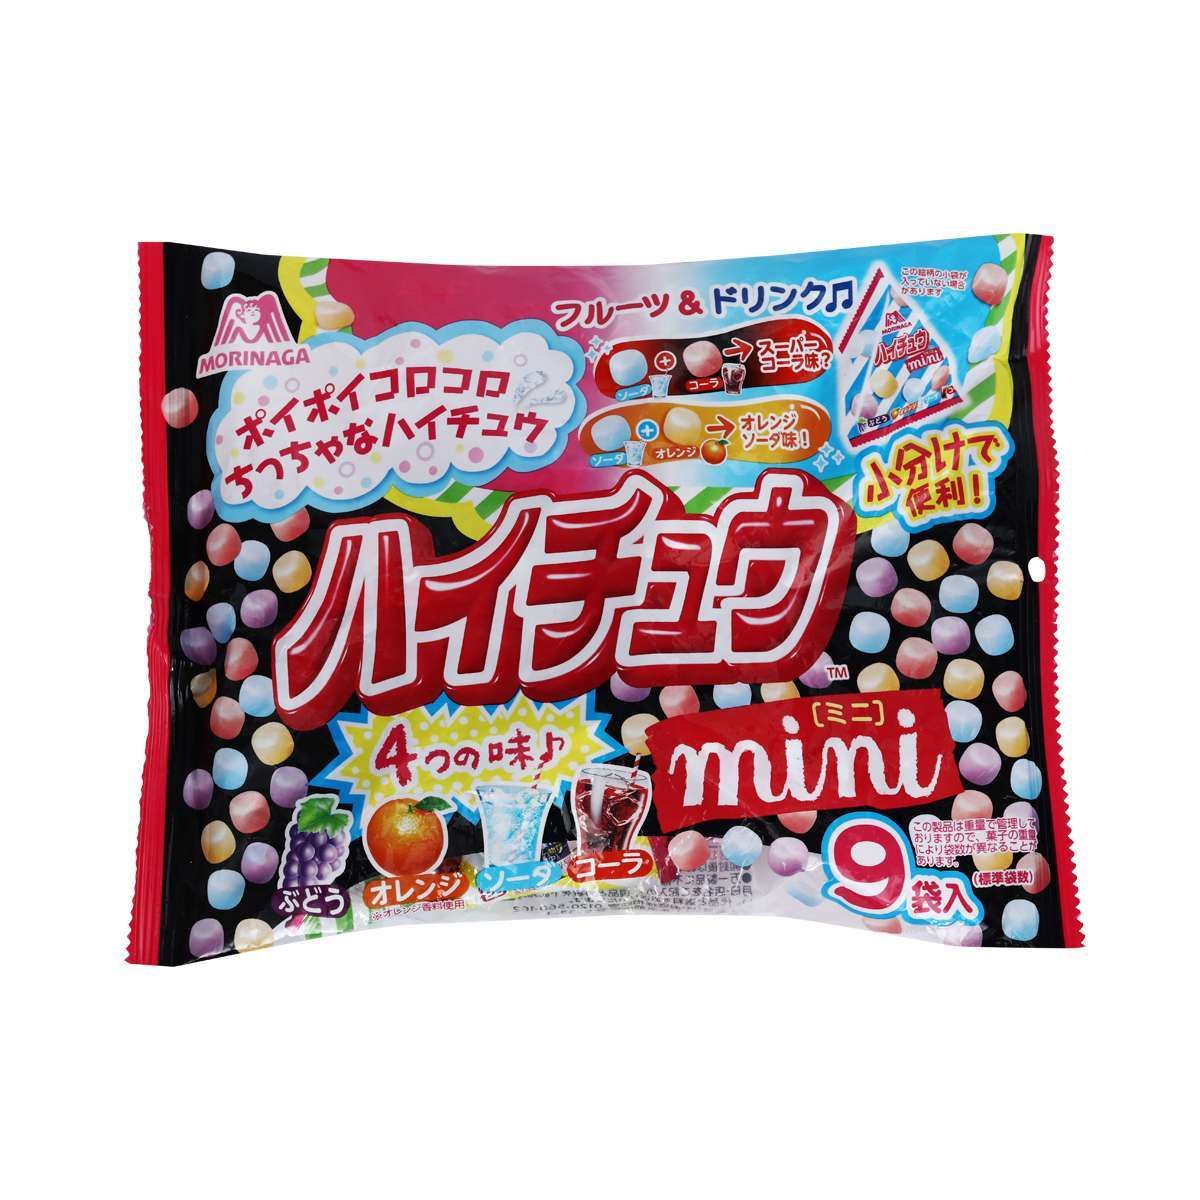  MORINAGA- Kẹo mềm Hi-chew mini nhiều vị 90g 